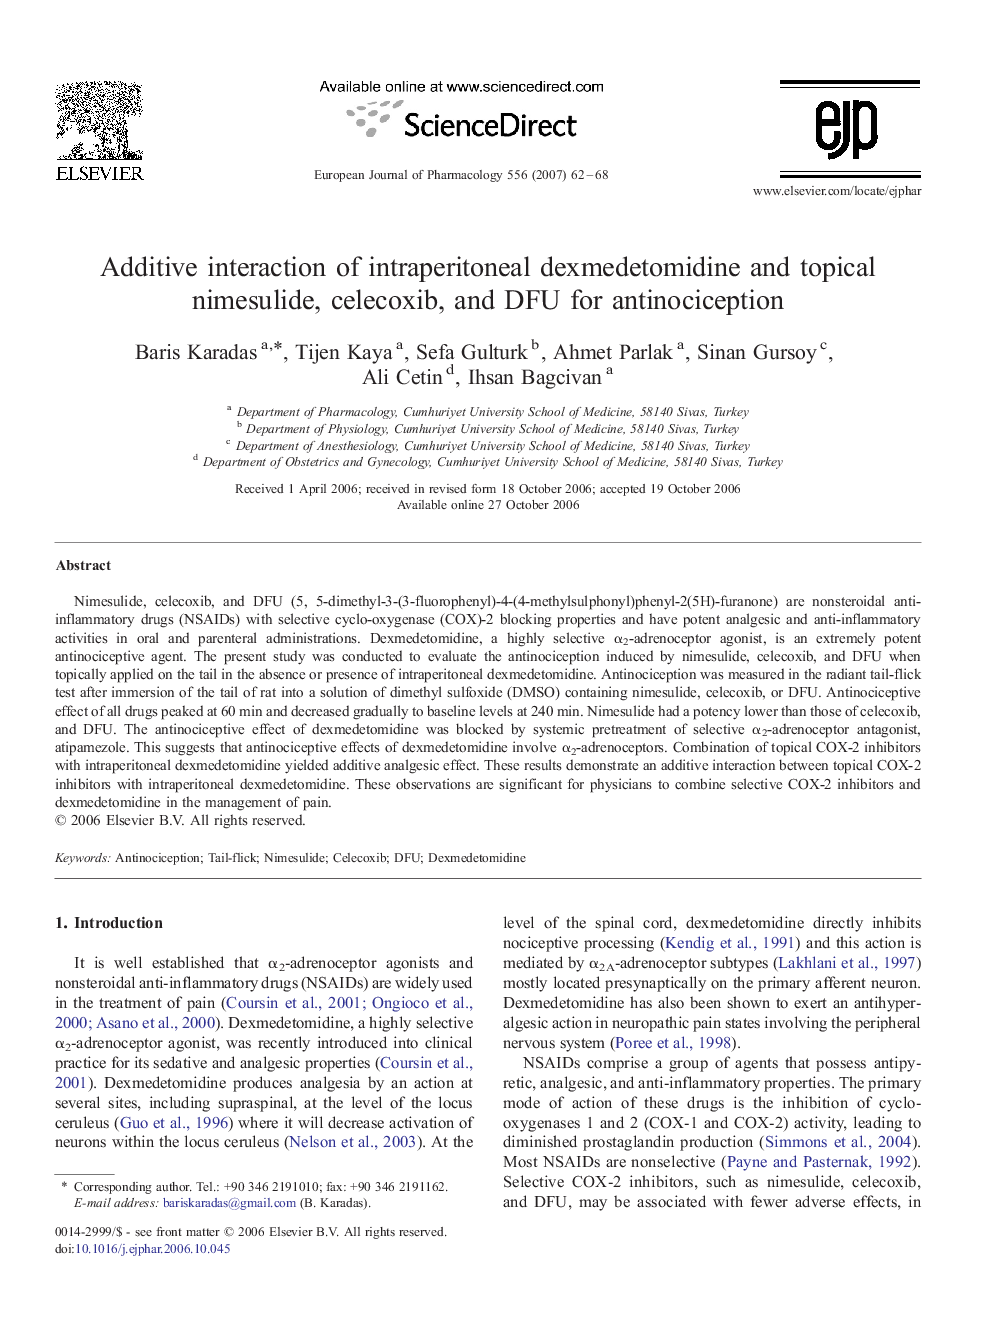 Additive interaction of intraperitoneal dexmedetomidine and topical nimesulide, celecoxib, and DFU for antinociception